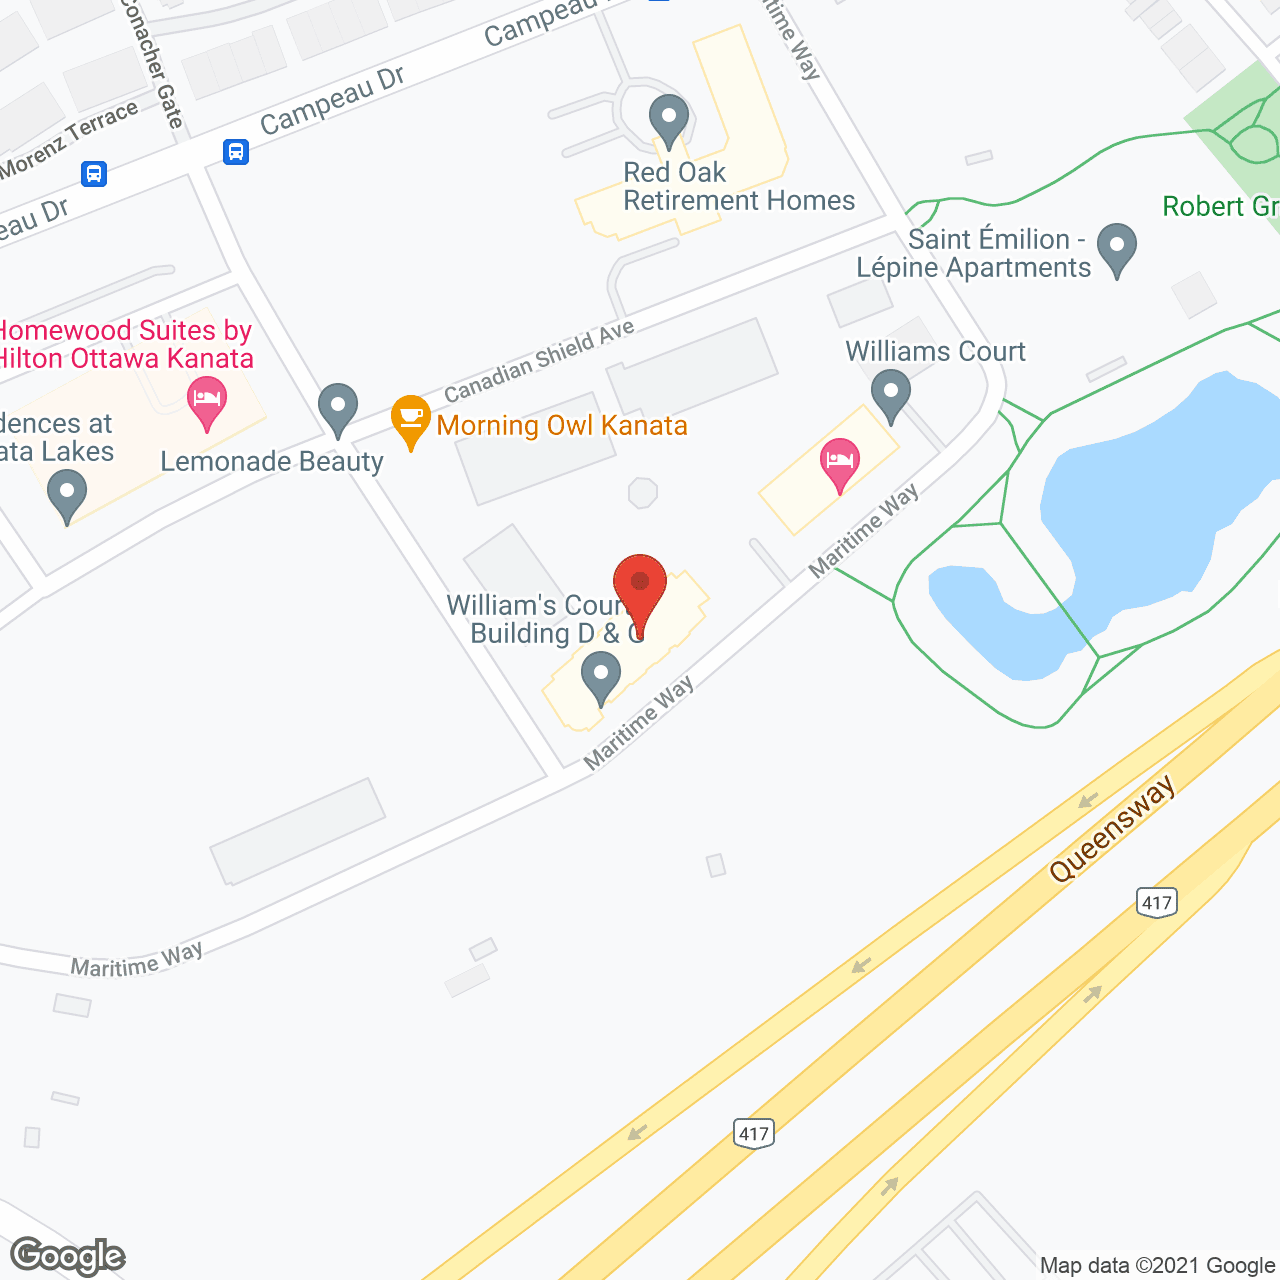 William's Court Building D in google map